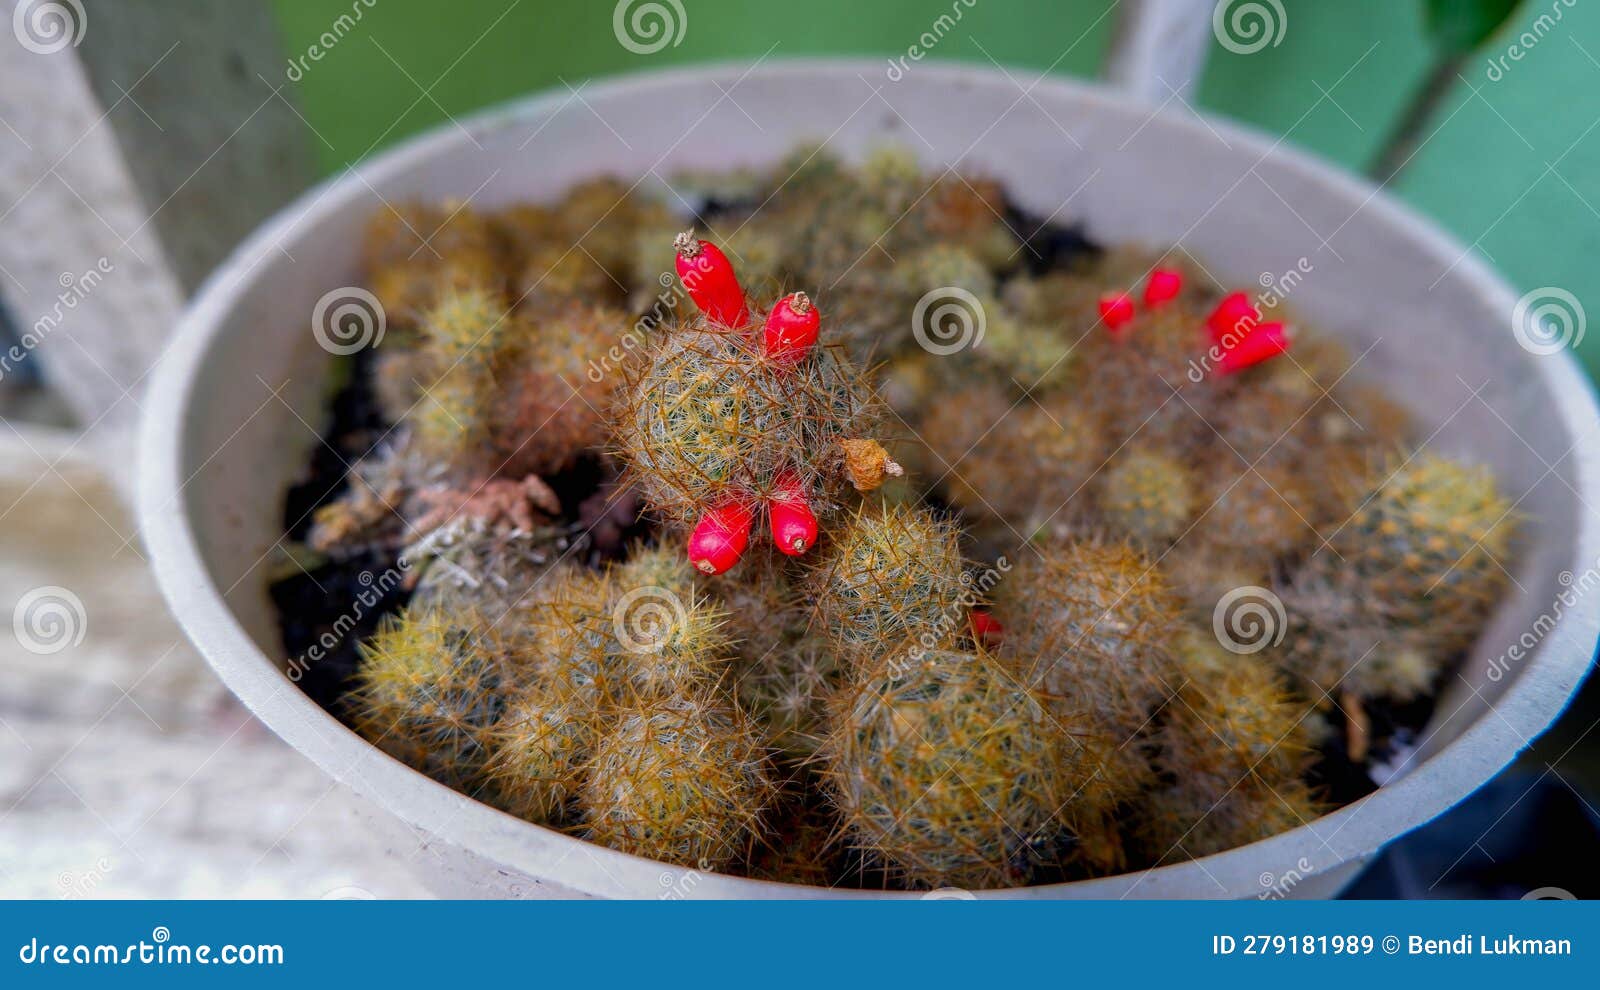 cactus type notocactus scopa 'albispina prolifera, as a mini ornamental plant